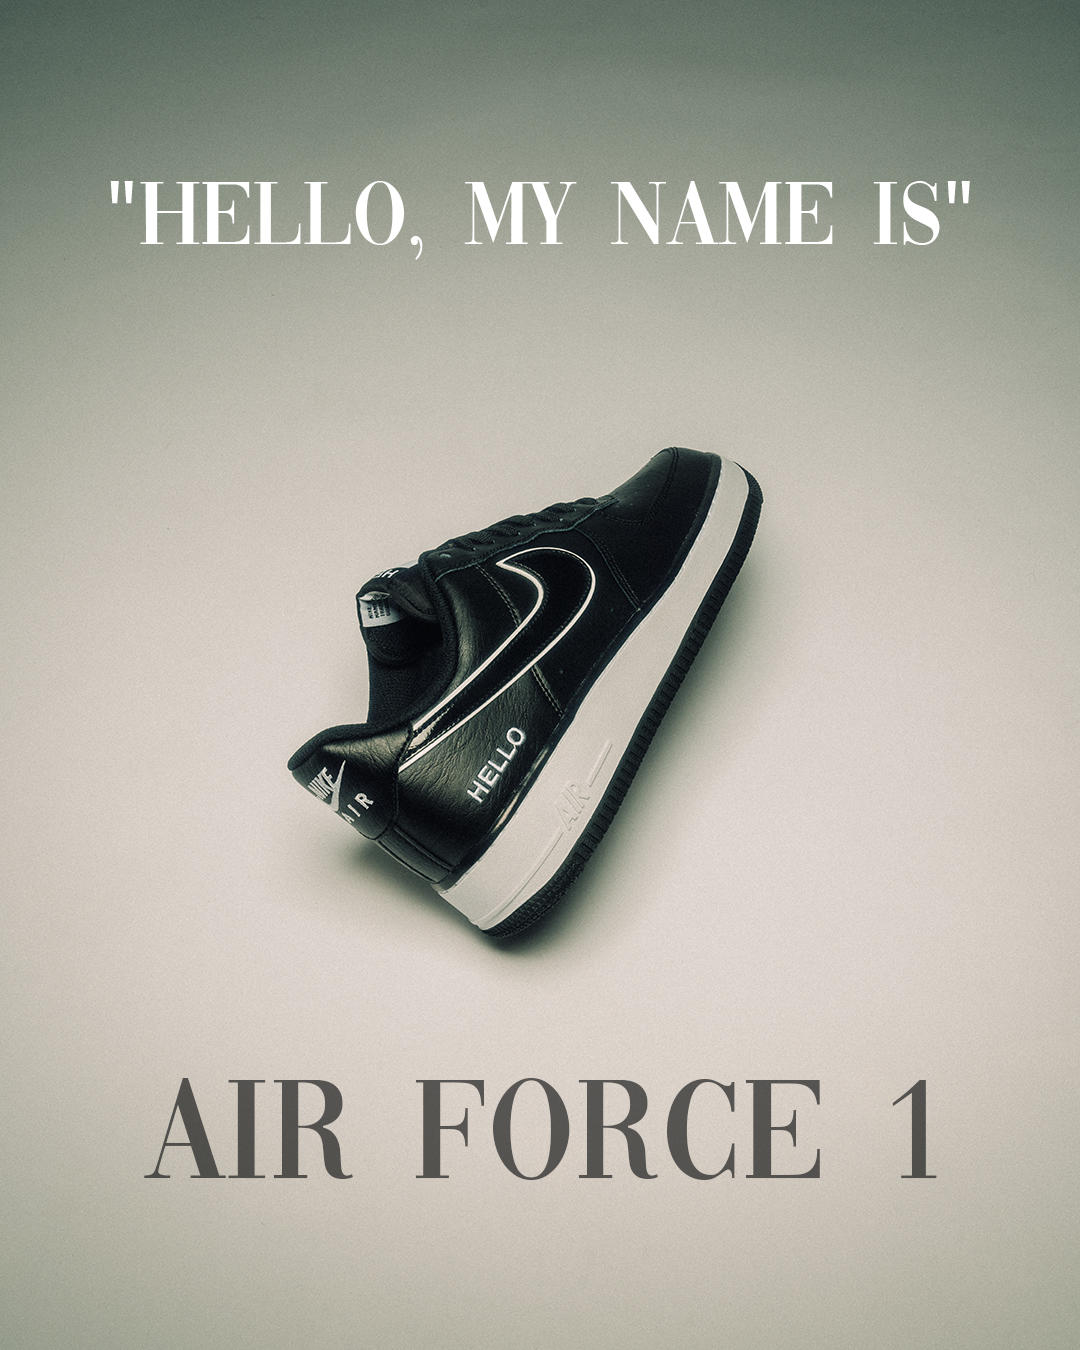 Nike AIR FORCE 1 '07 LX "HELLO"